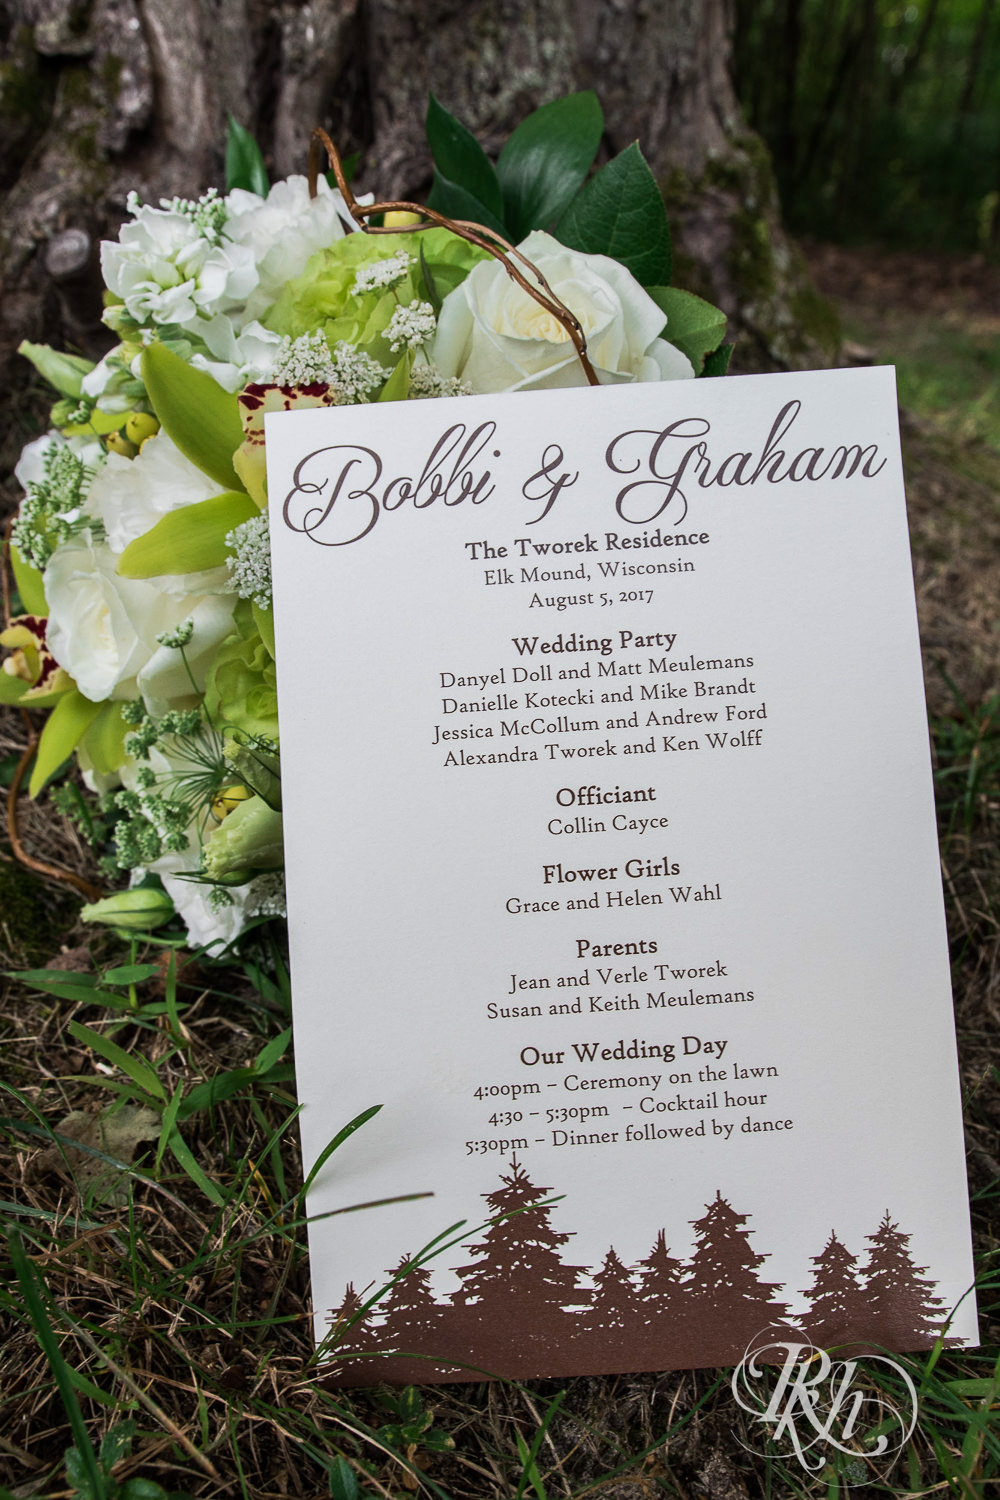 Wedding invitation and flowers in Elk Mound, Wisconsin.